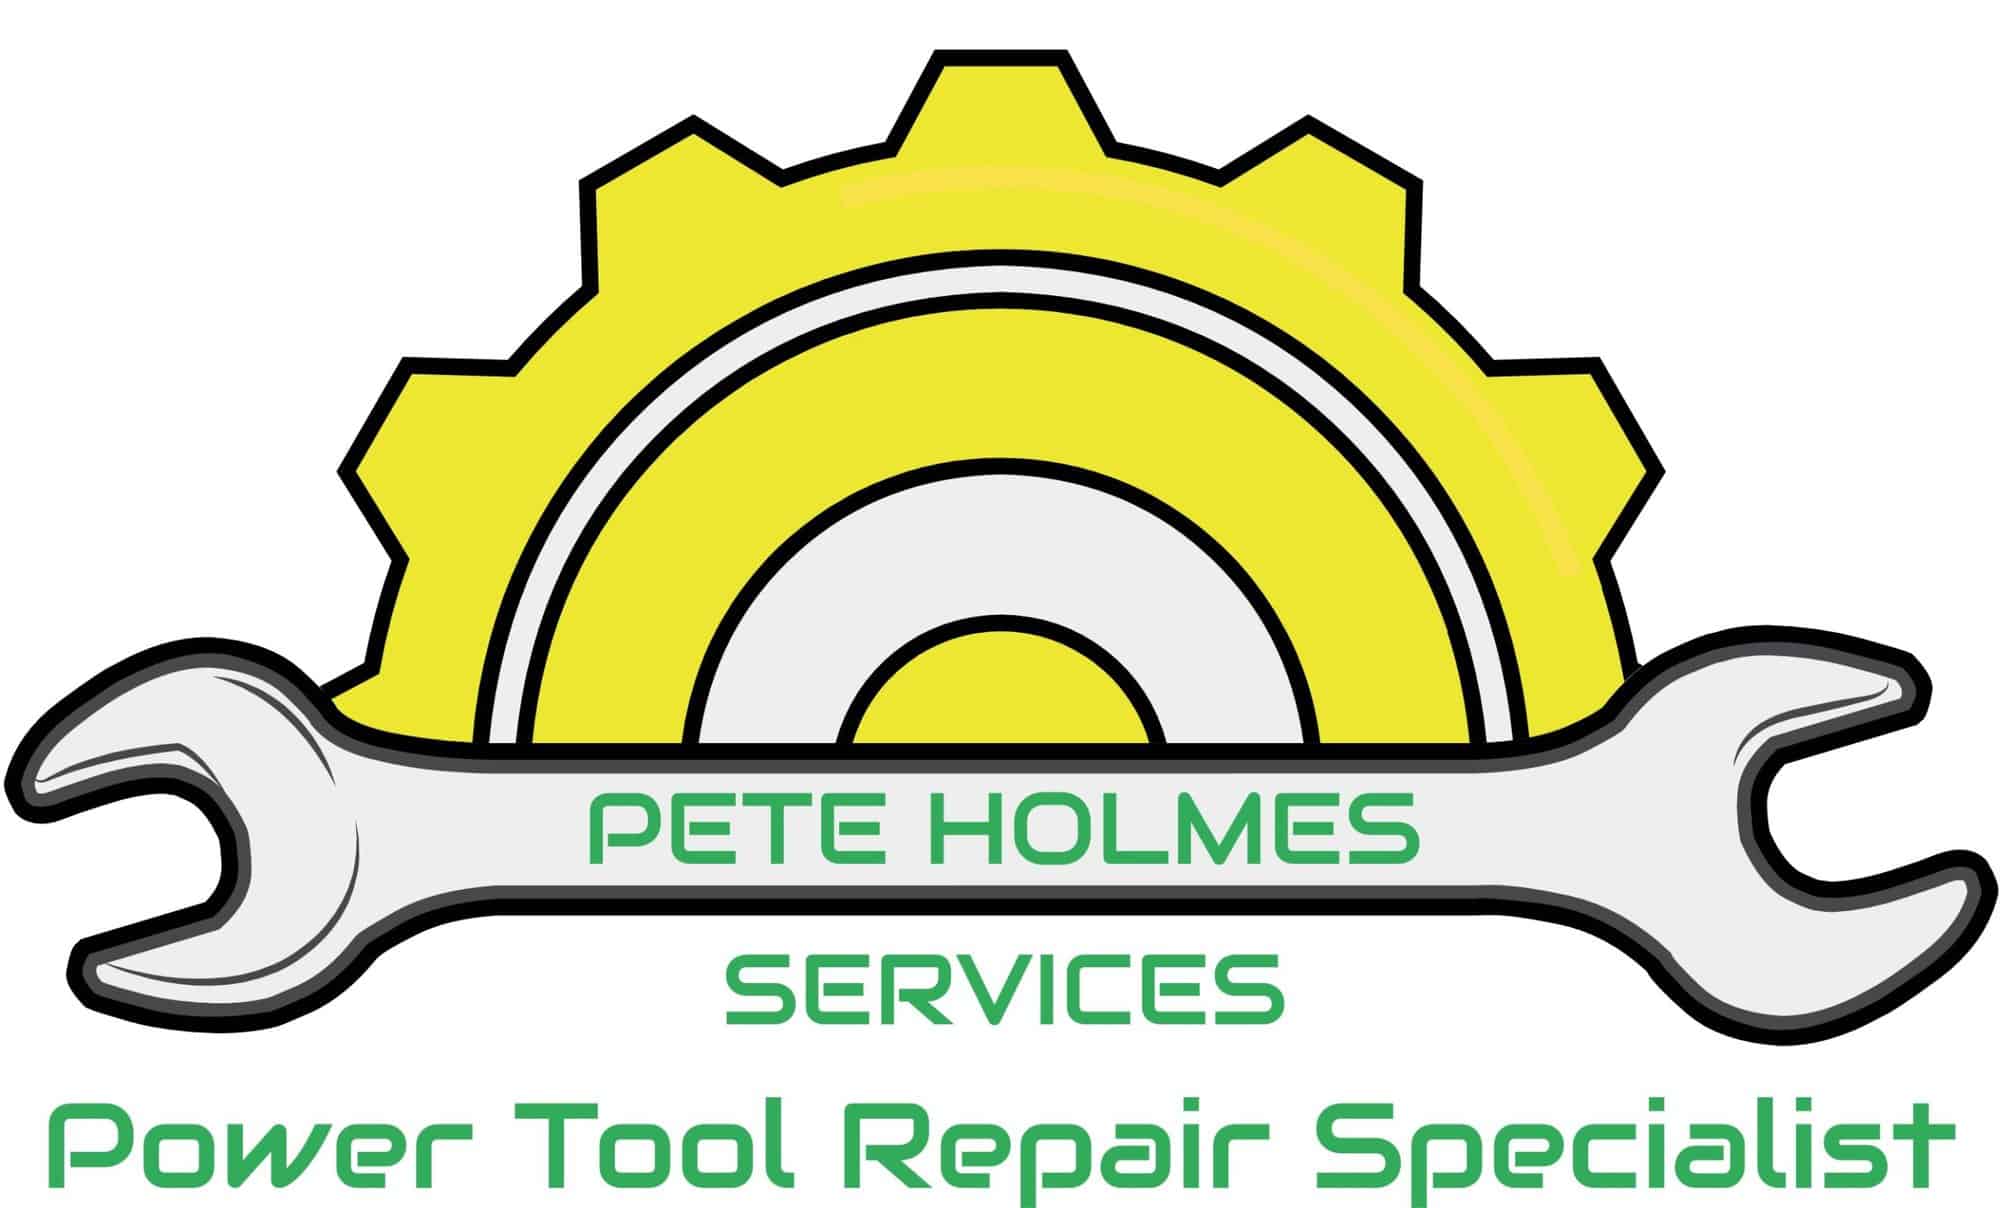 Pete Holmes Services logo